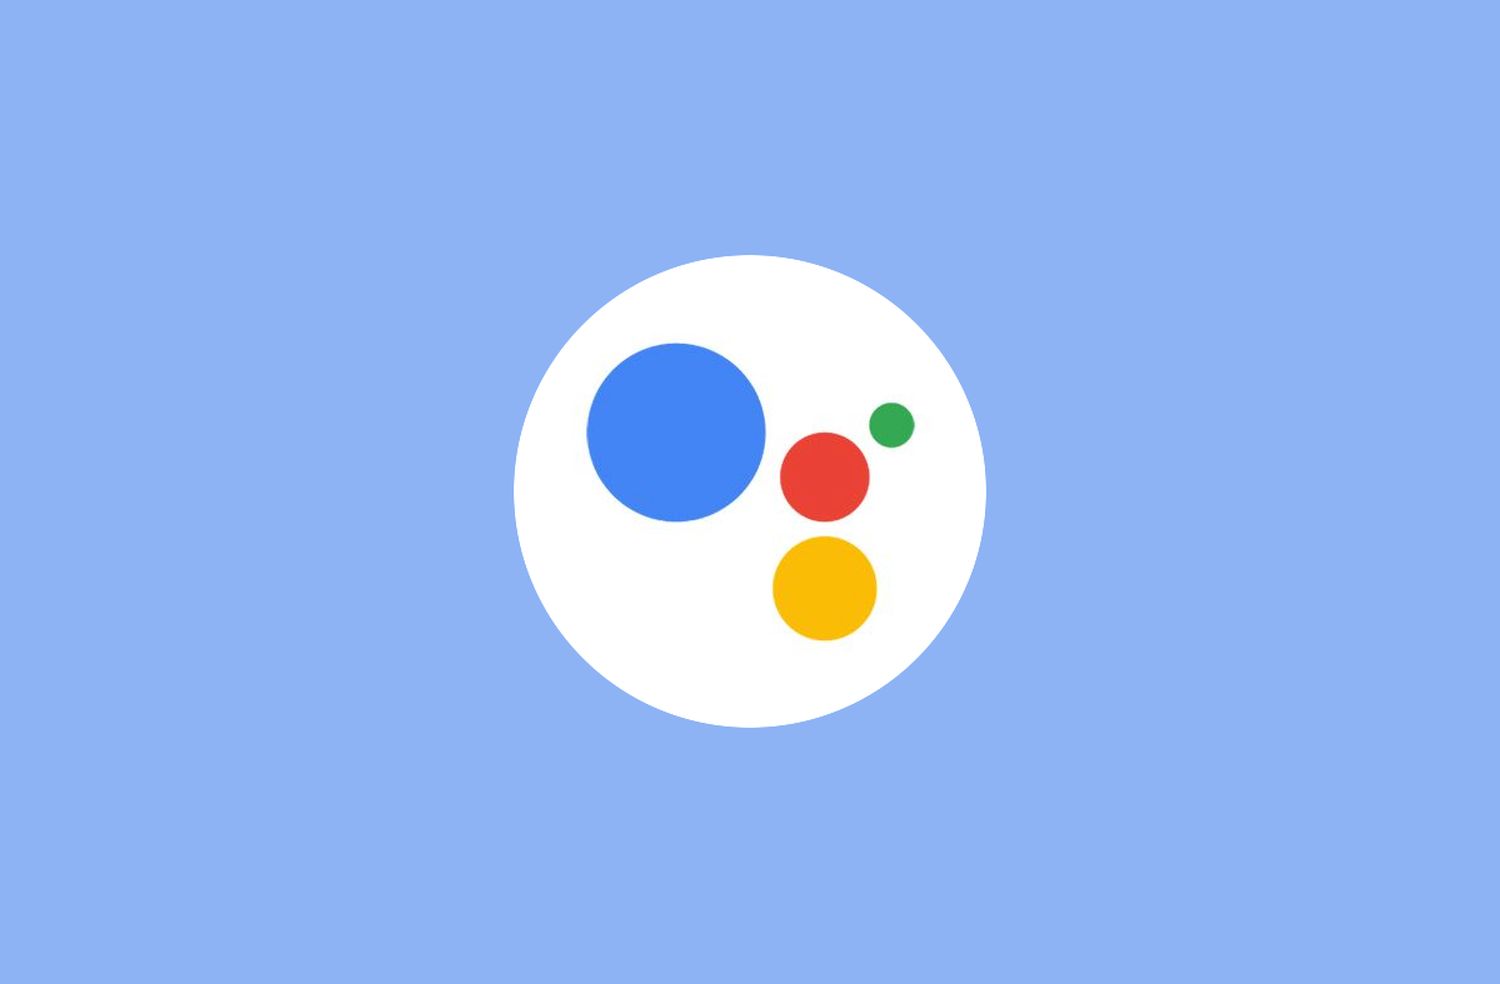 google assistant logo